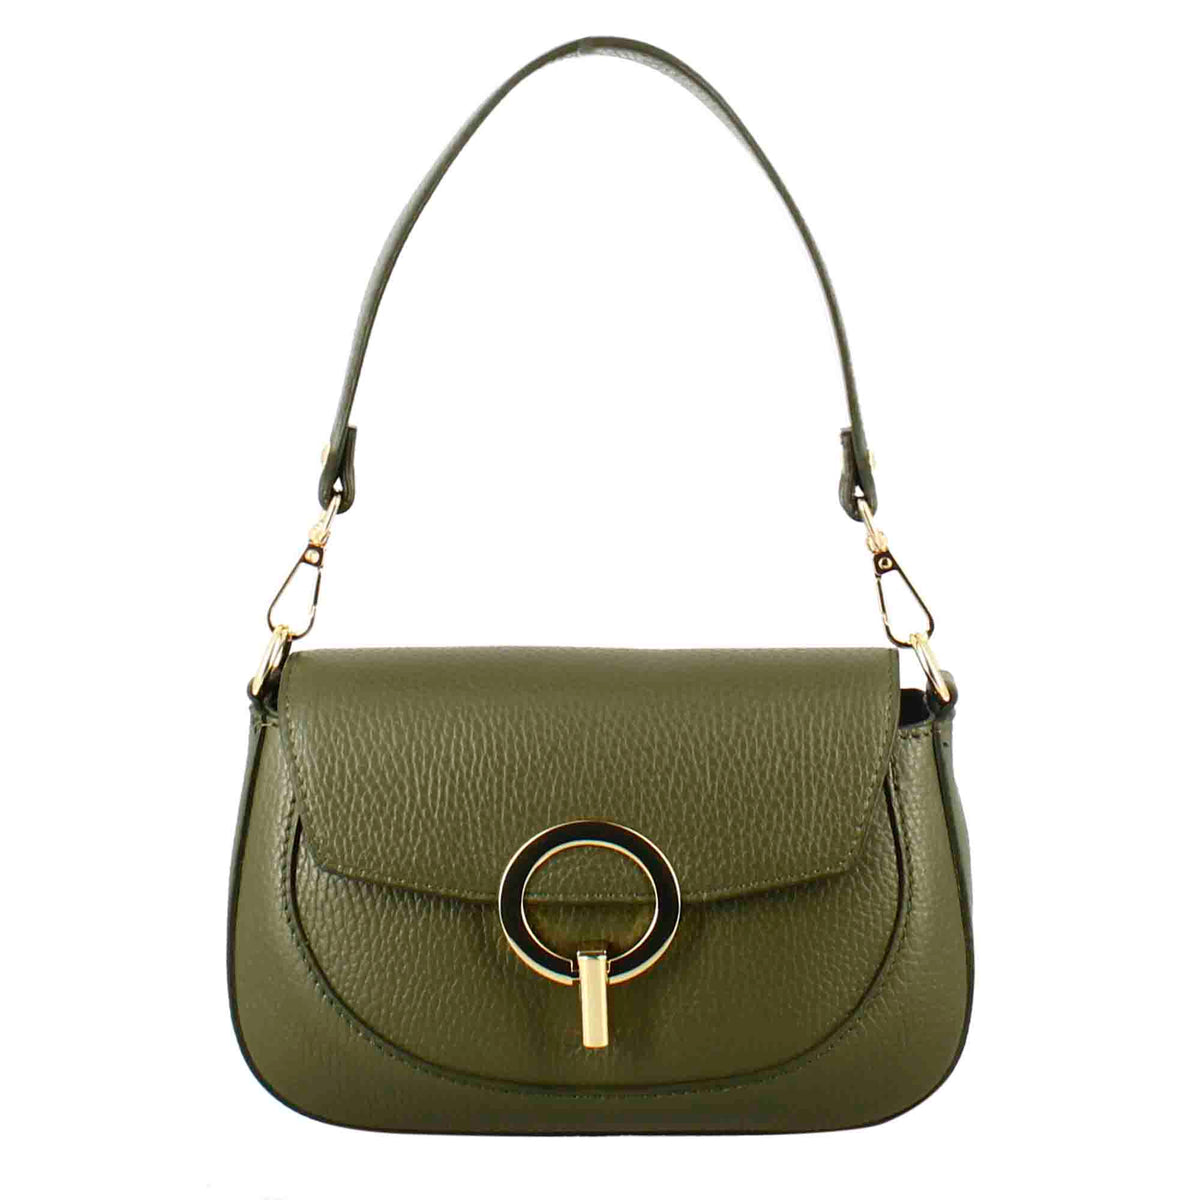 Grace women's green leather handbag